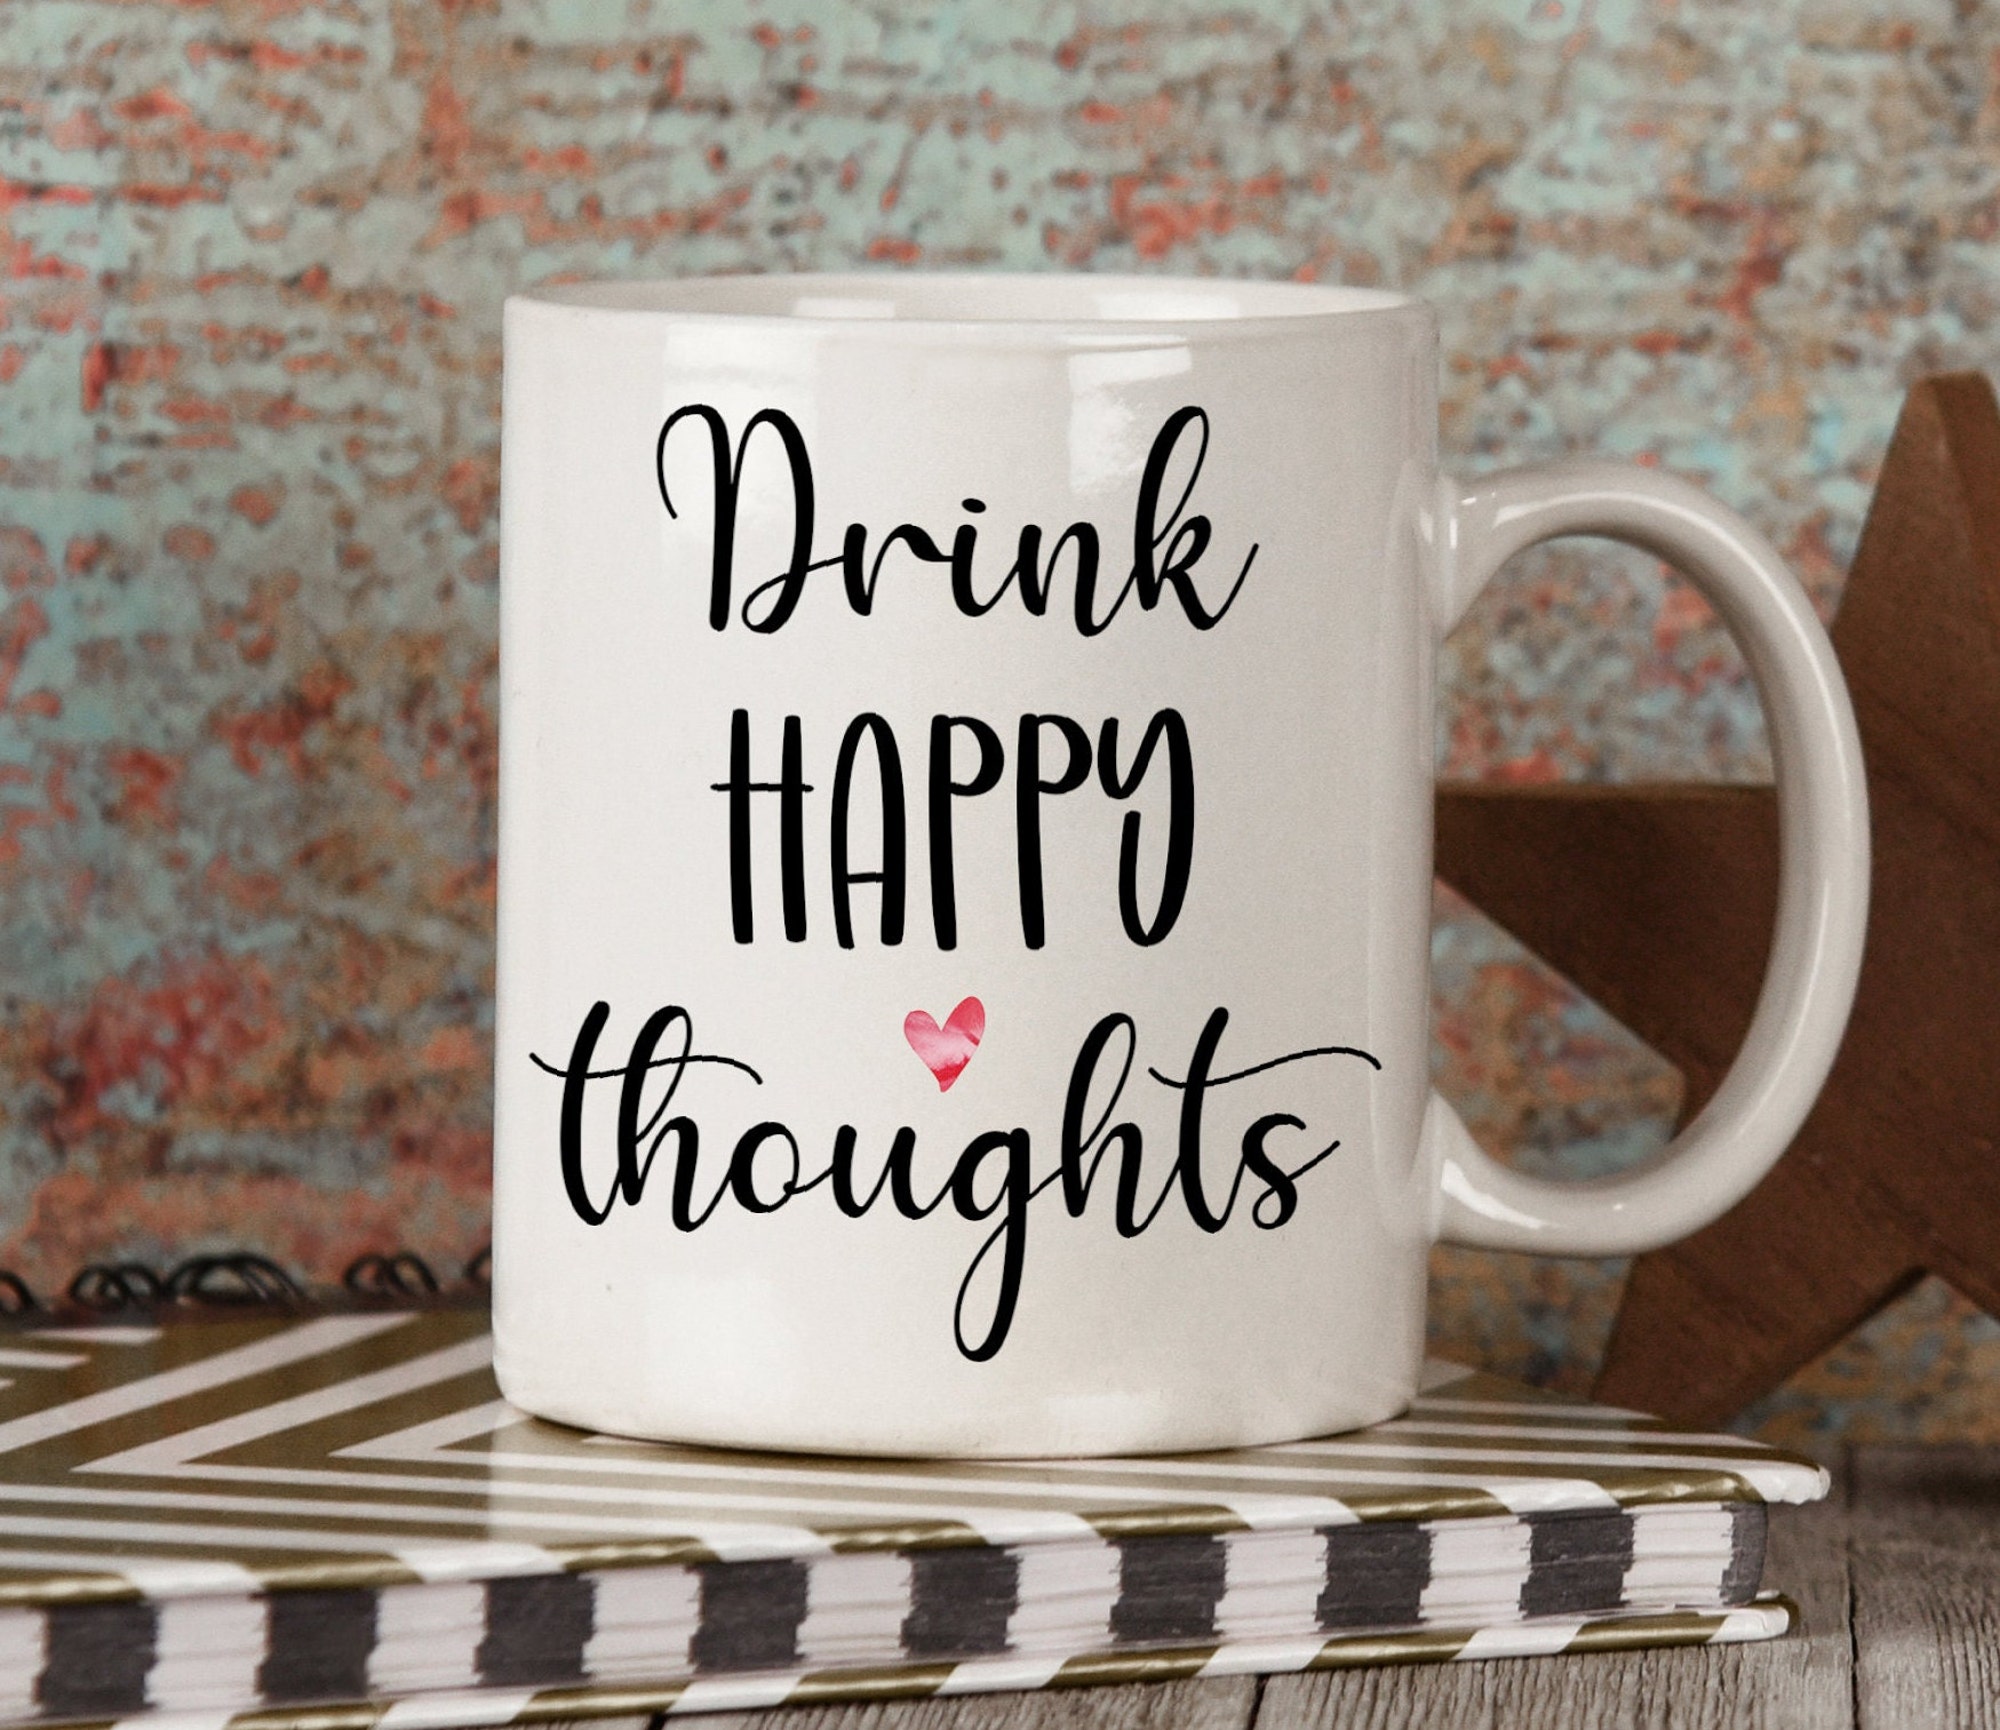 Drink Happy Thoughts Mug